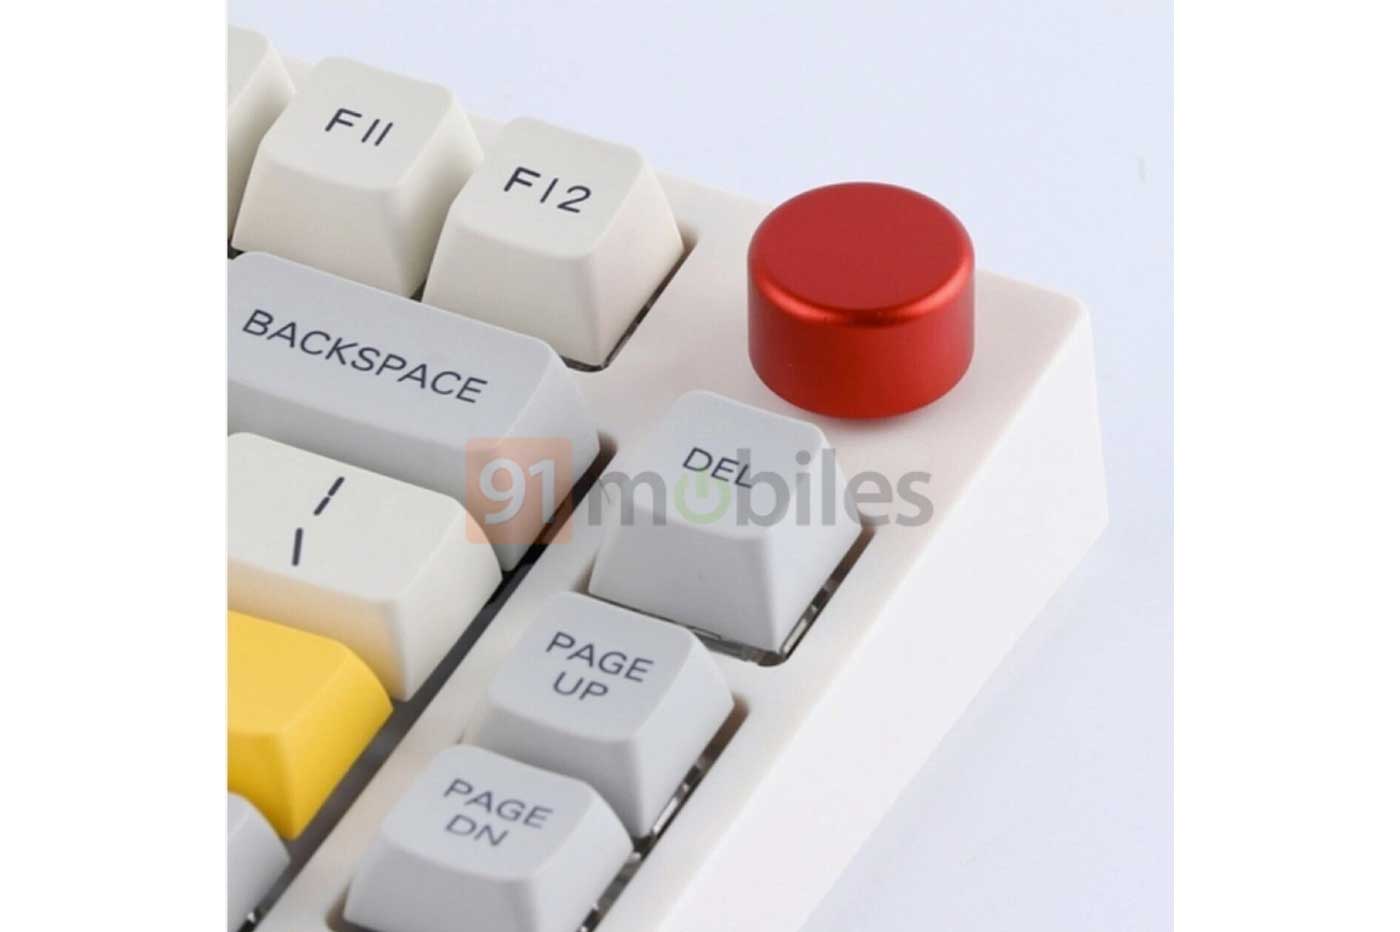 OnePlus Keyboard